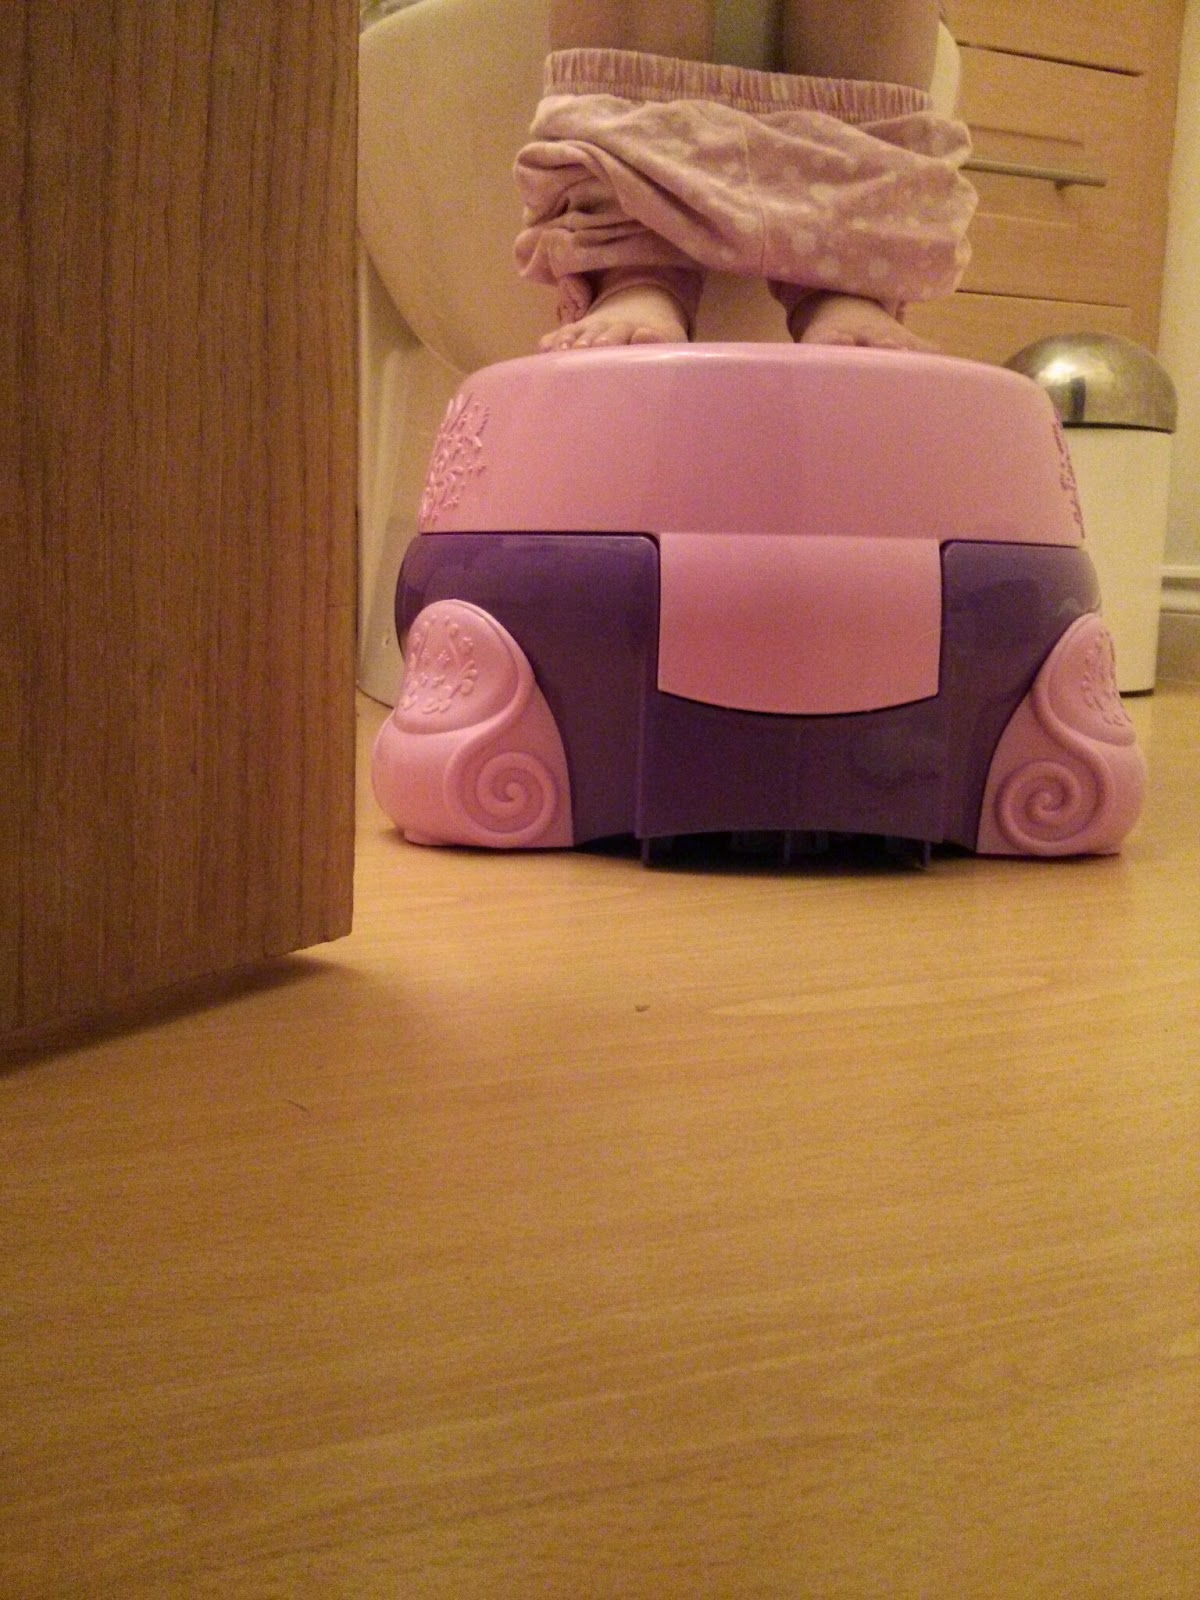 Using Disney Princess potty as step